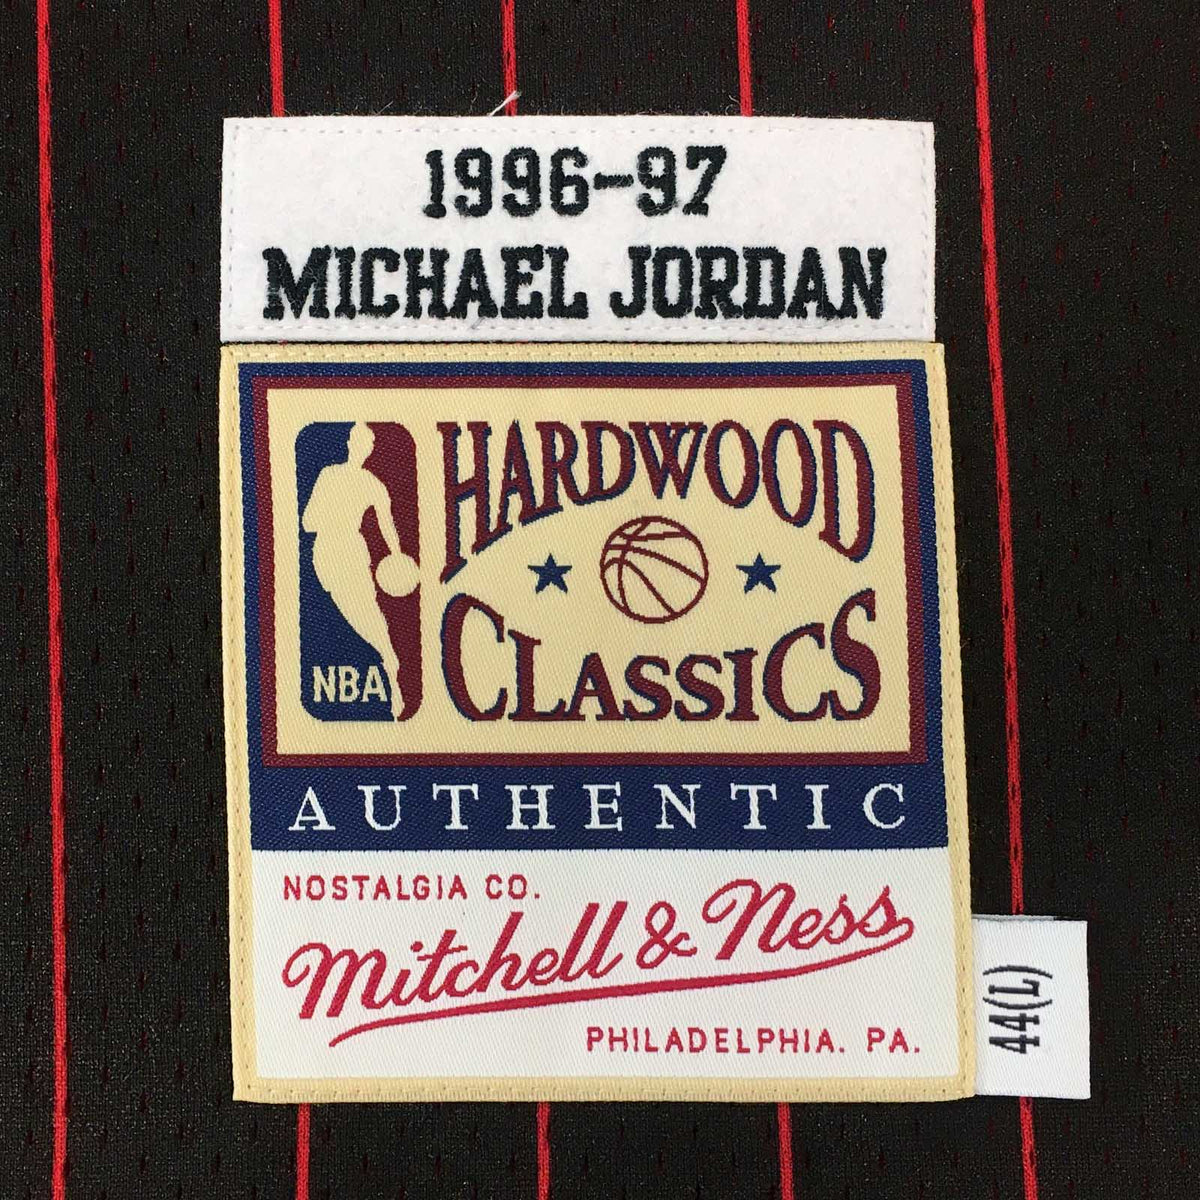 Mitchell & Ness Michael Jordan Chicago Bulls 1996-97 Road Authentic NBA  Jersey Red/Black/White Men's - SS23 - US